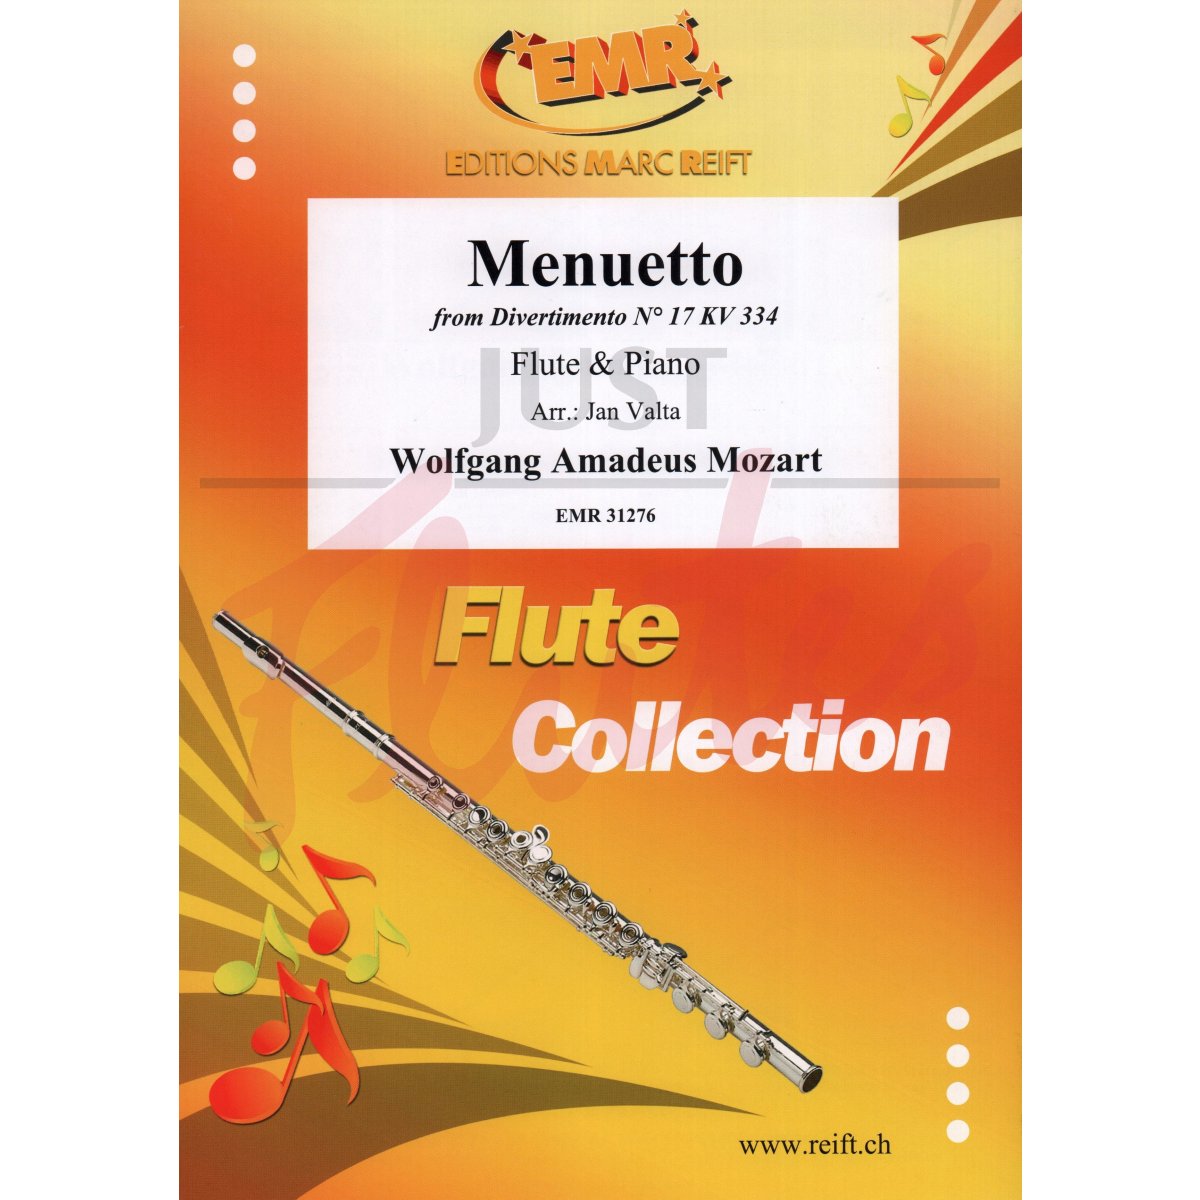 Menuetto from Divertimento No. 17 KV 334 for Flute and Piano